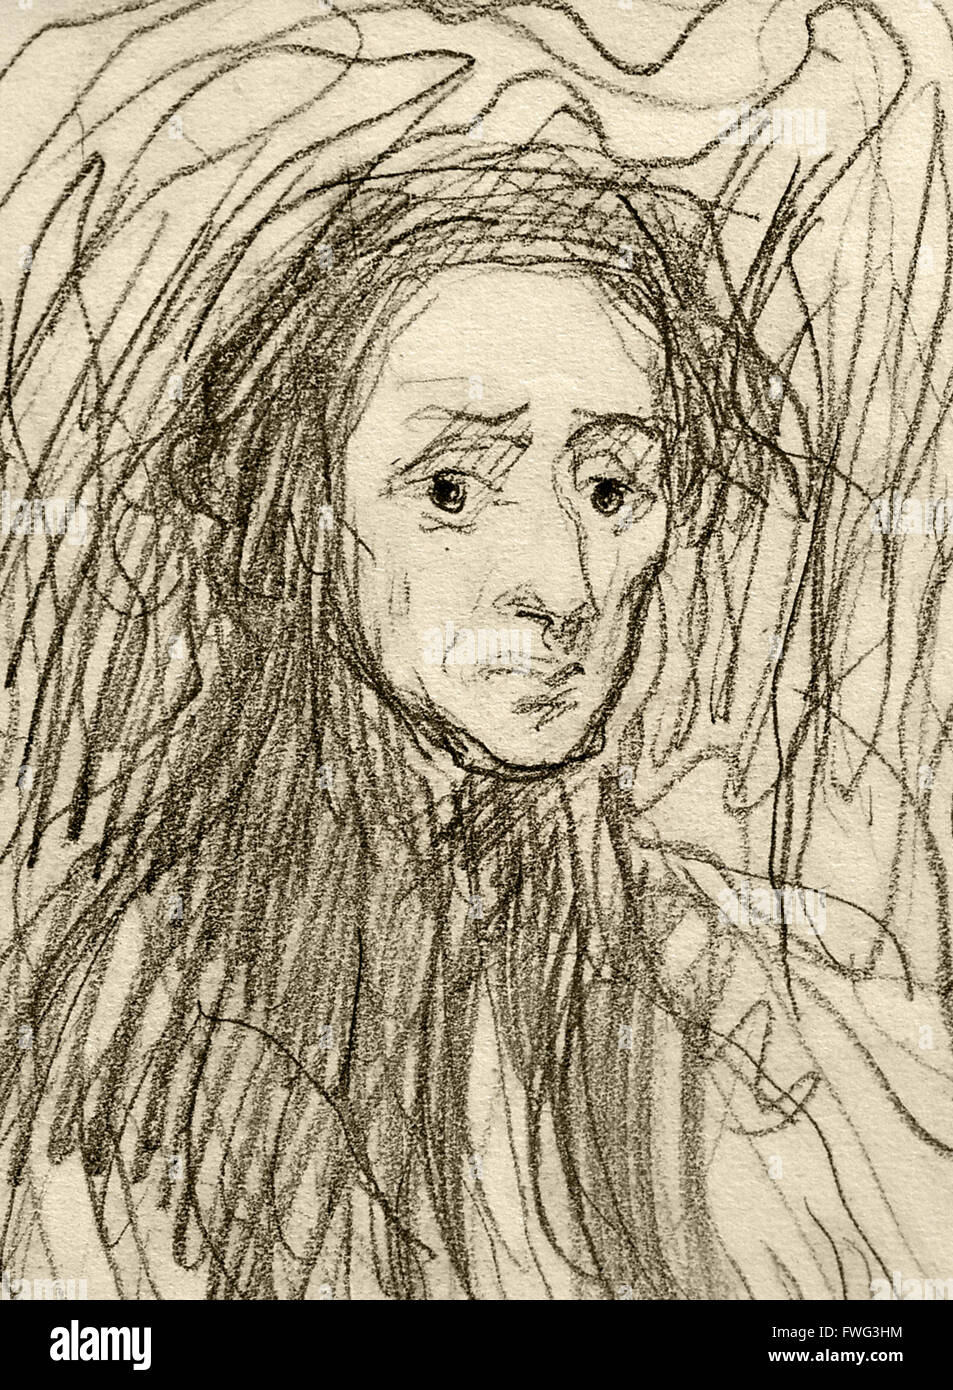 Chopin 1899 Wojciech Weiss 1875 – 1950 Maler Polen ( Frédéric François Chopin1810 – 1849 ( Fryderyk Franciszek) Polnischer Komponist und virtuoser Pianist ) Stockfoto